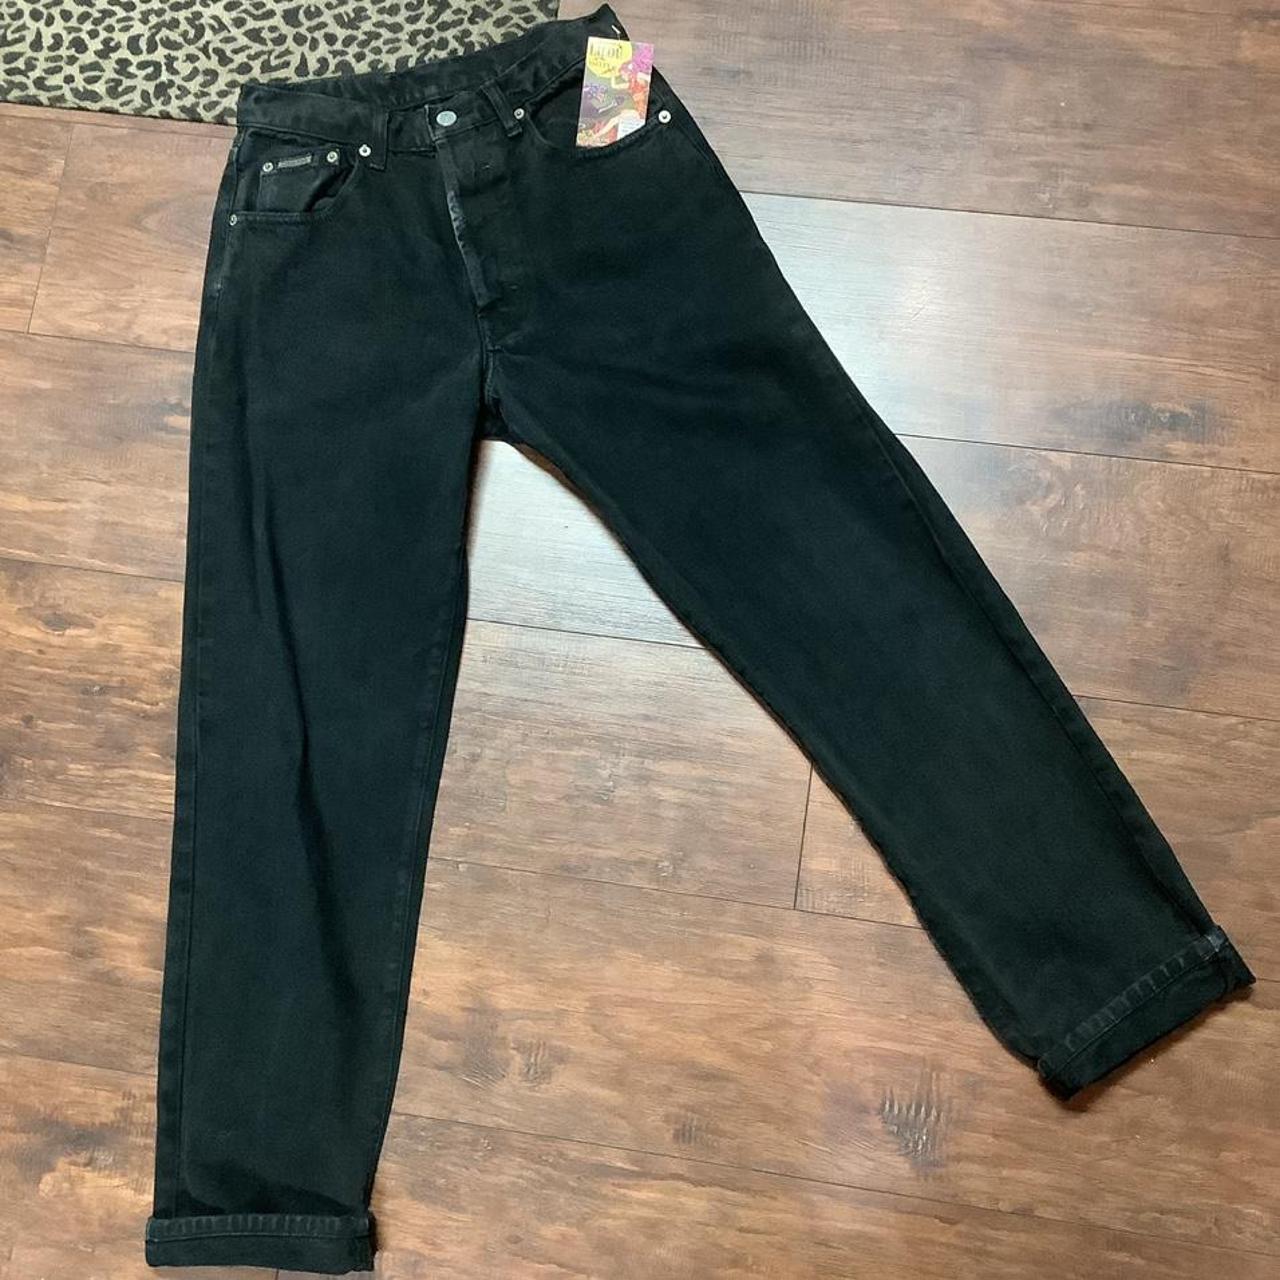 Product Image 2 - Vintage BLack CK jeans.
LabeLed Size: